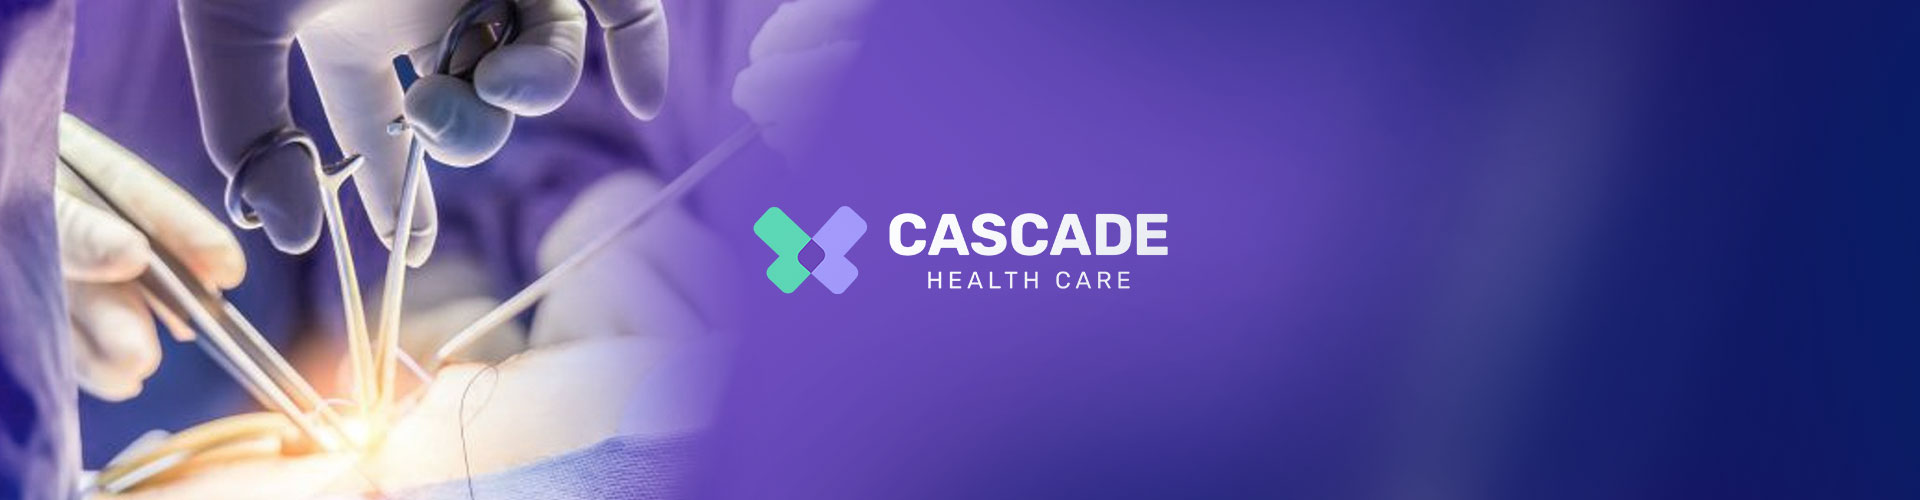 Case Study - Cascade Health Care